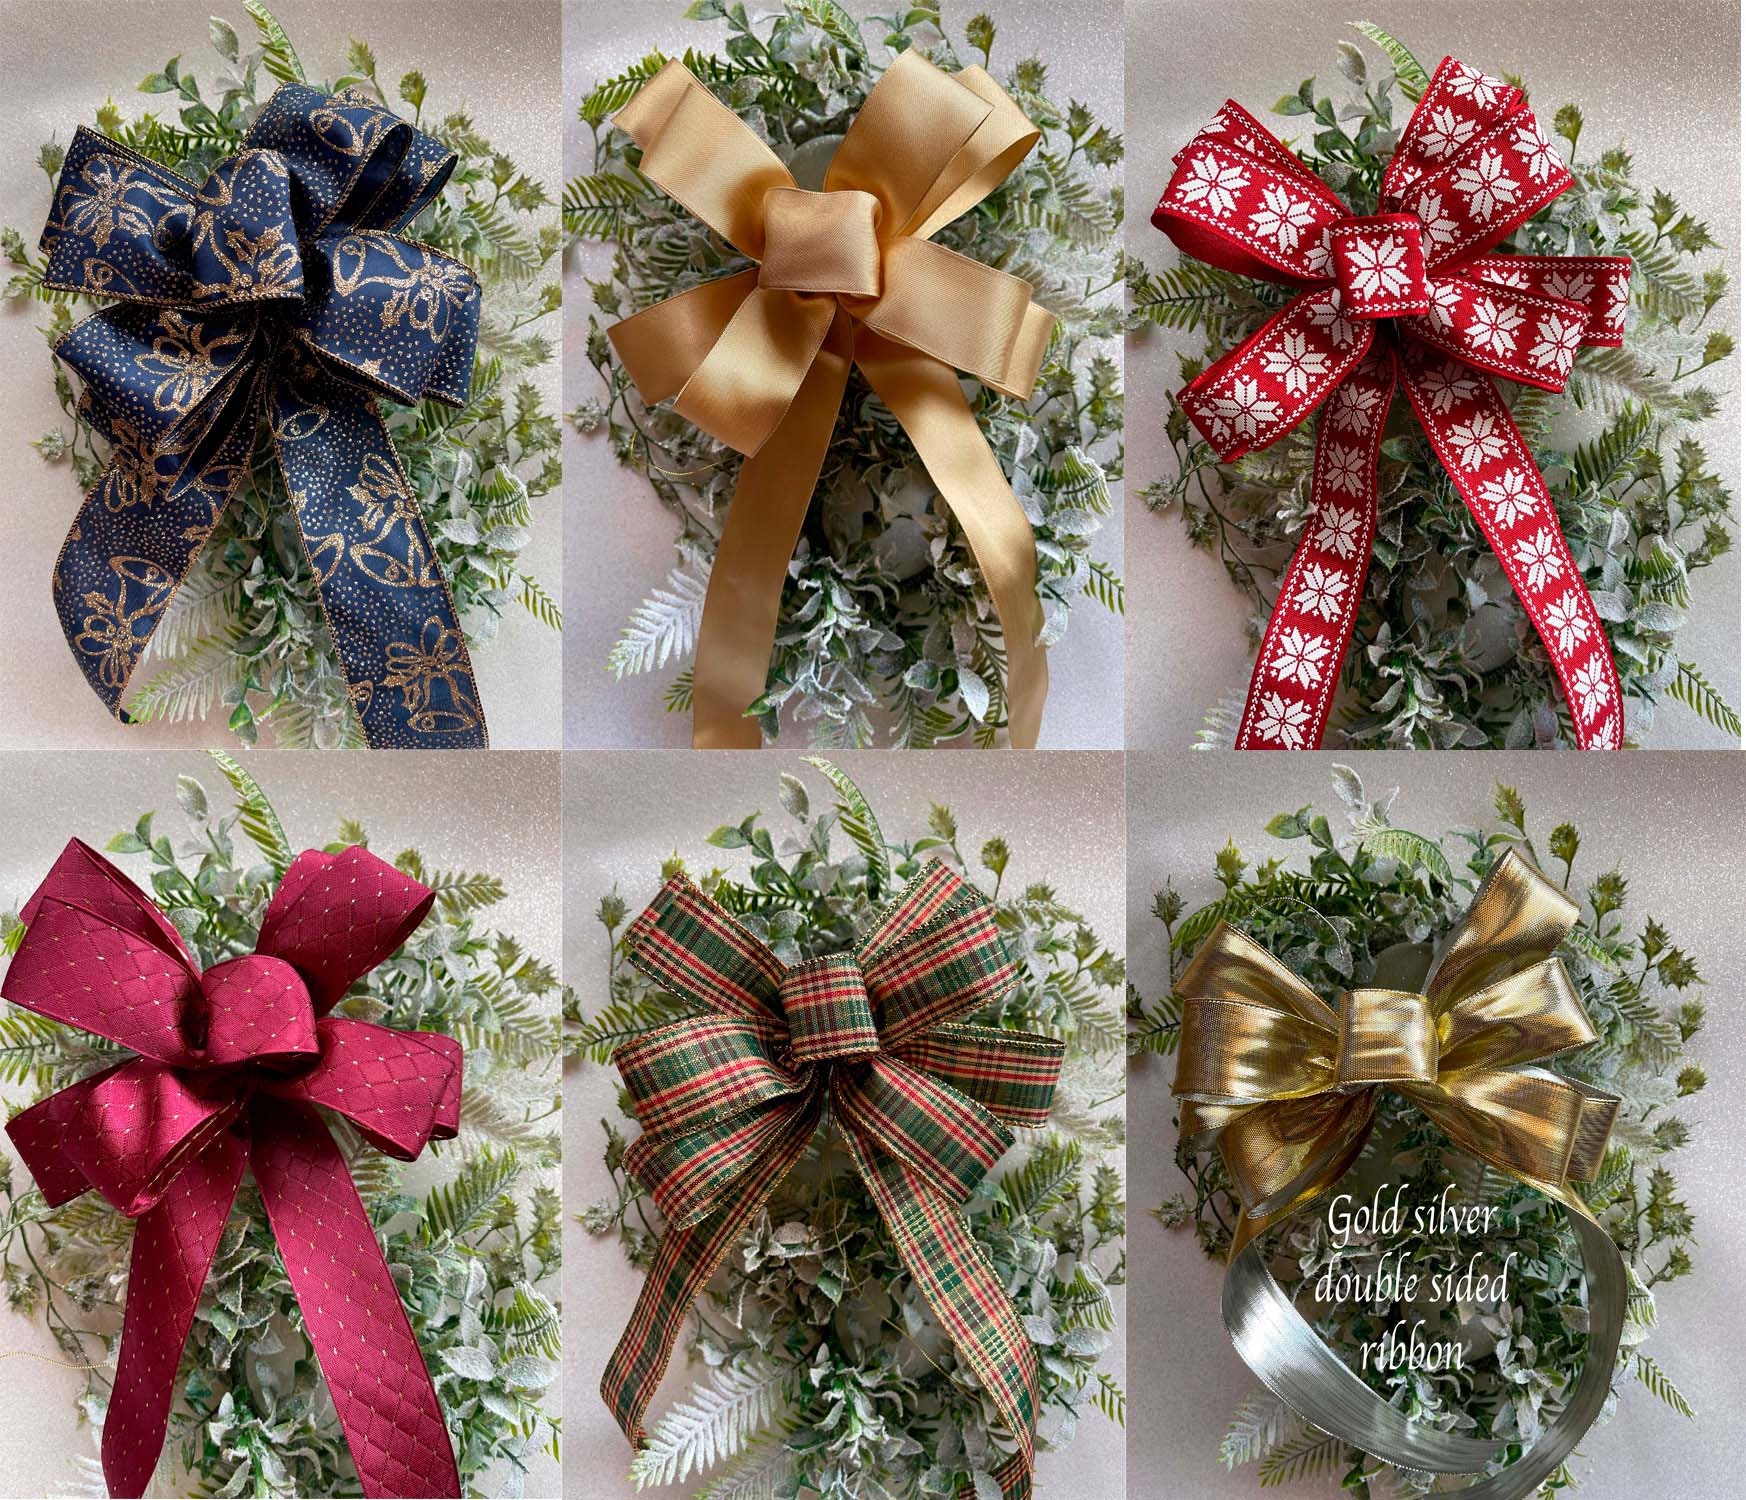 Merry Christmas Print Ribbon, Thin Christmas Ribbon for Wrapping, Christmas  Gift Wrapping Ribbon, Red and Green Christmas Ribbon. 